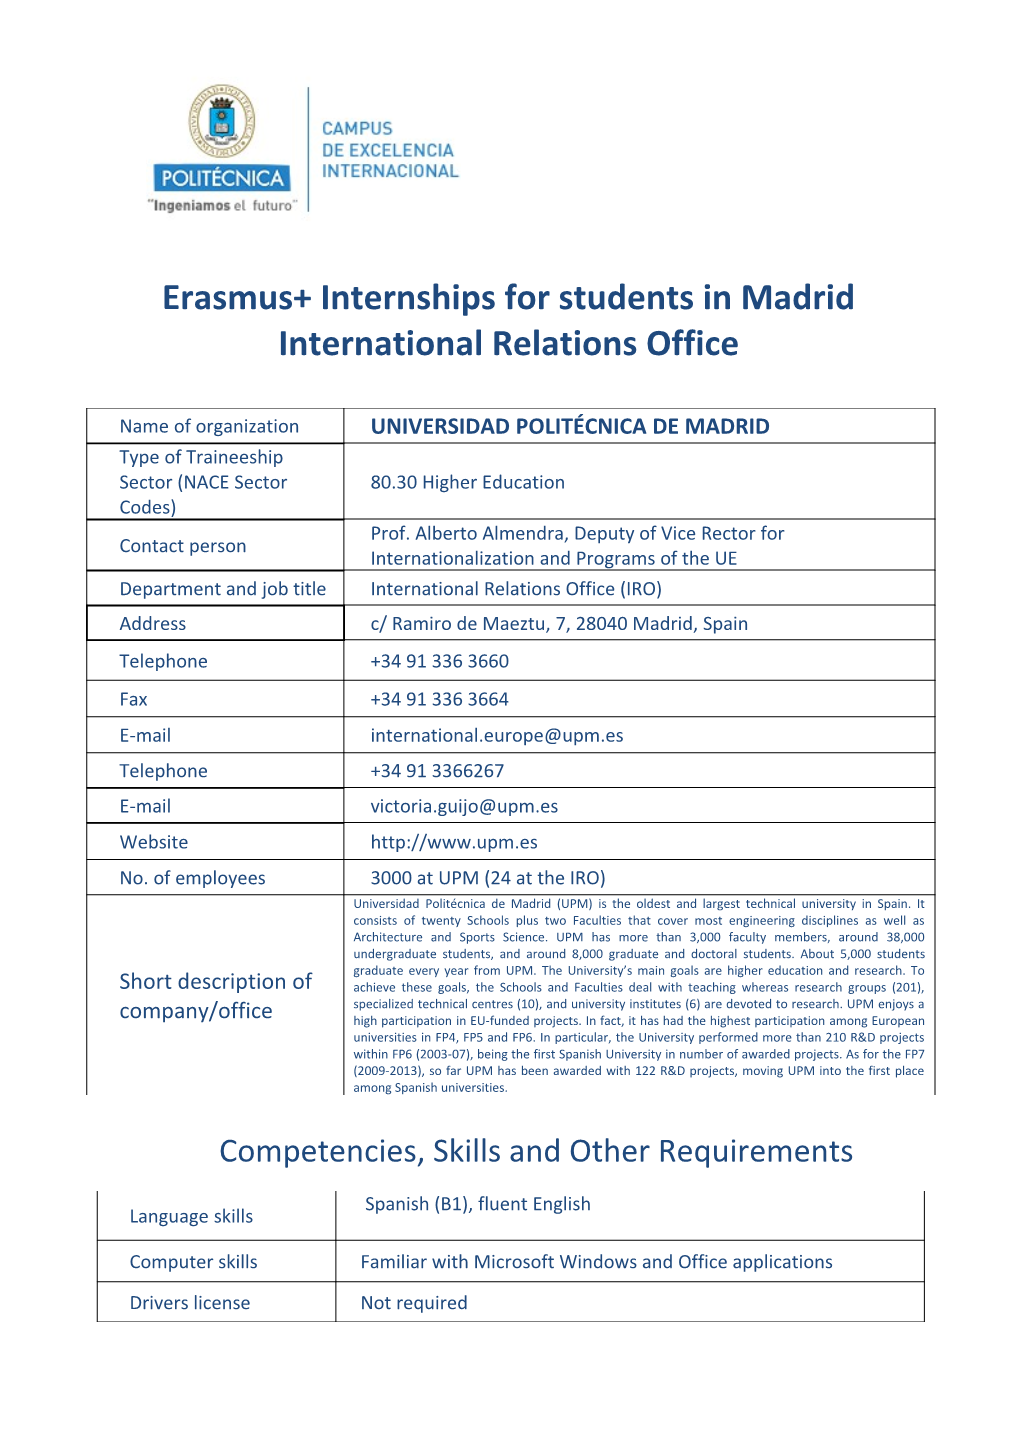 Erasmus+ Internships for Students in Madrid International Relations Office